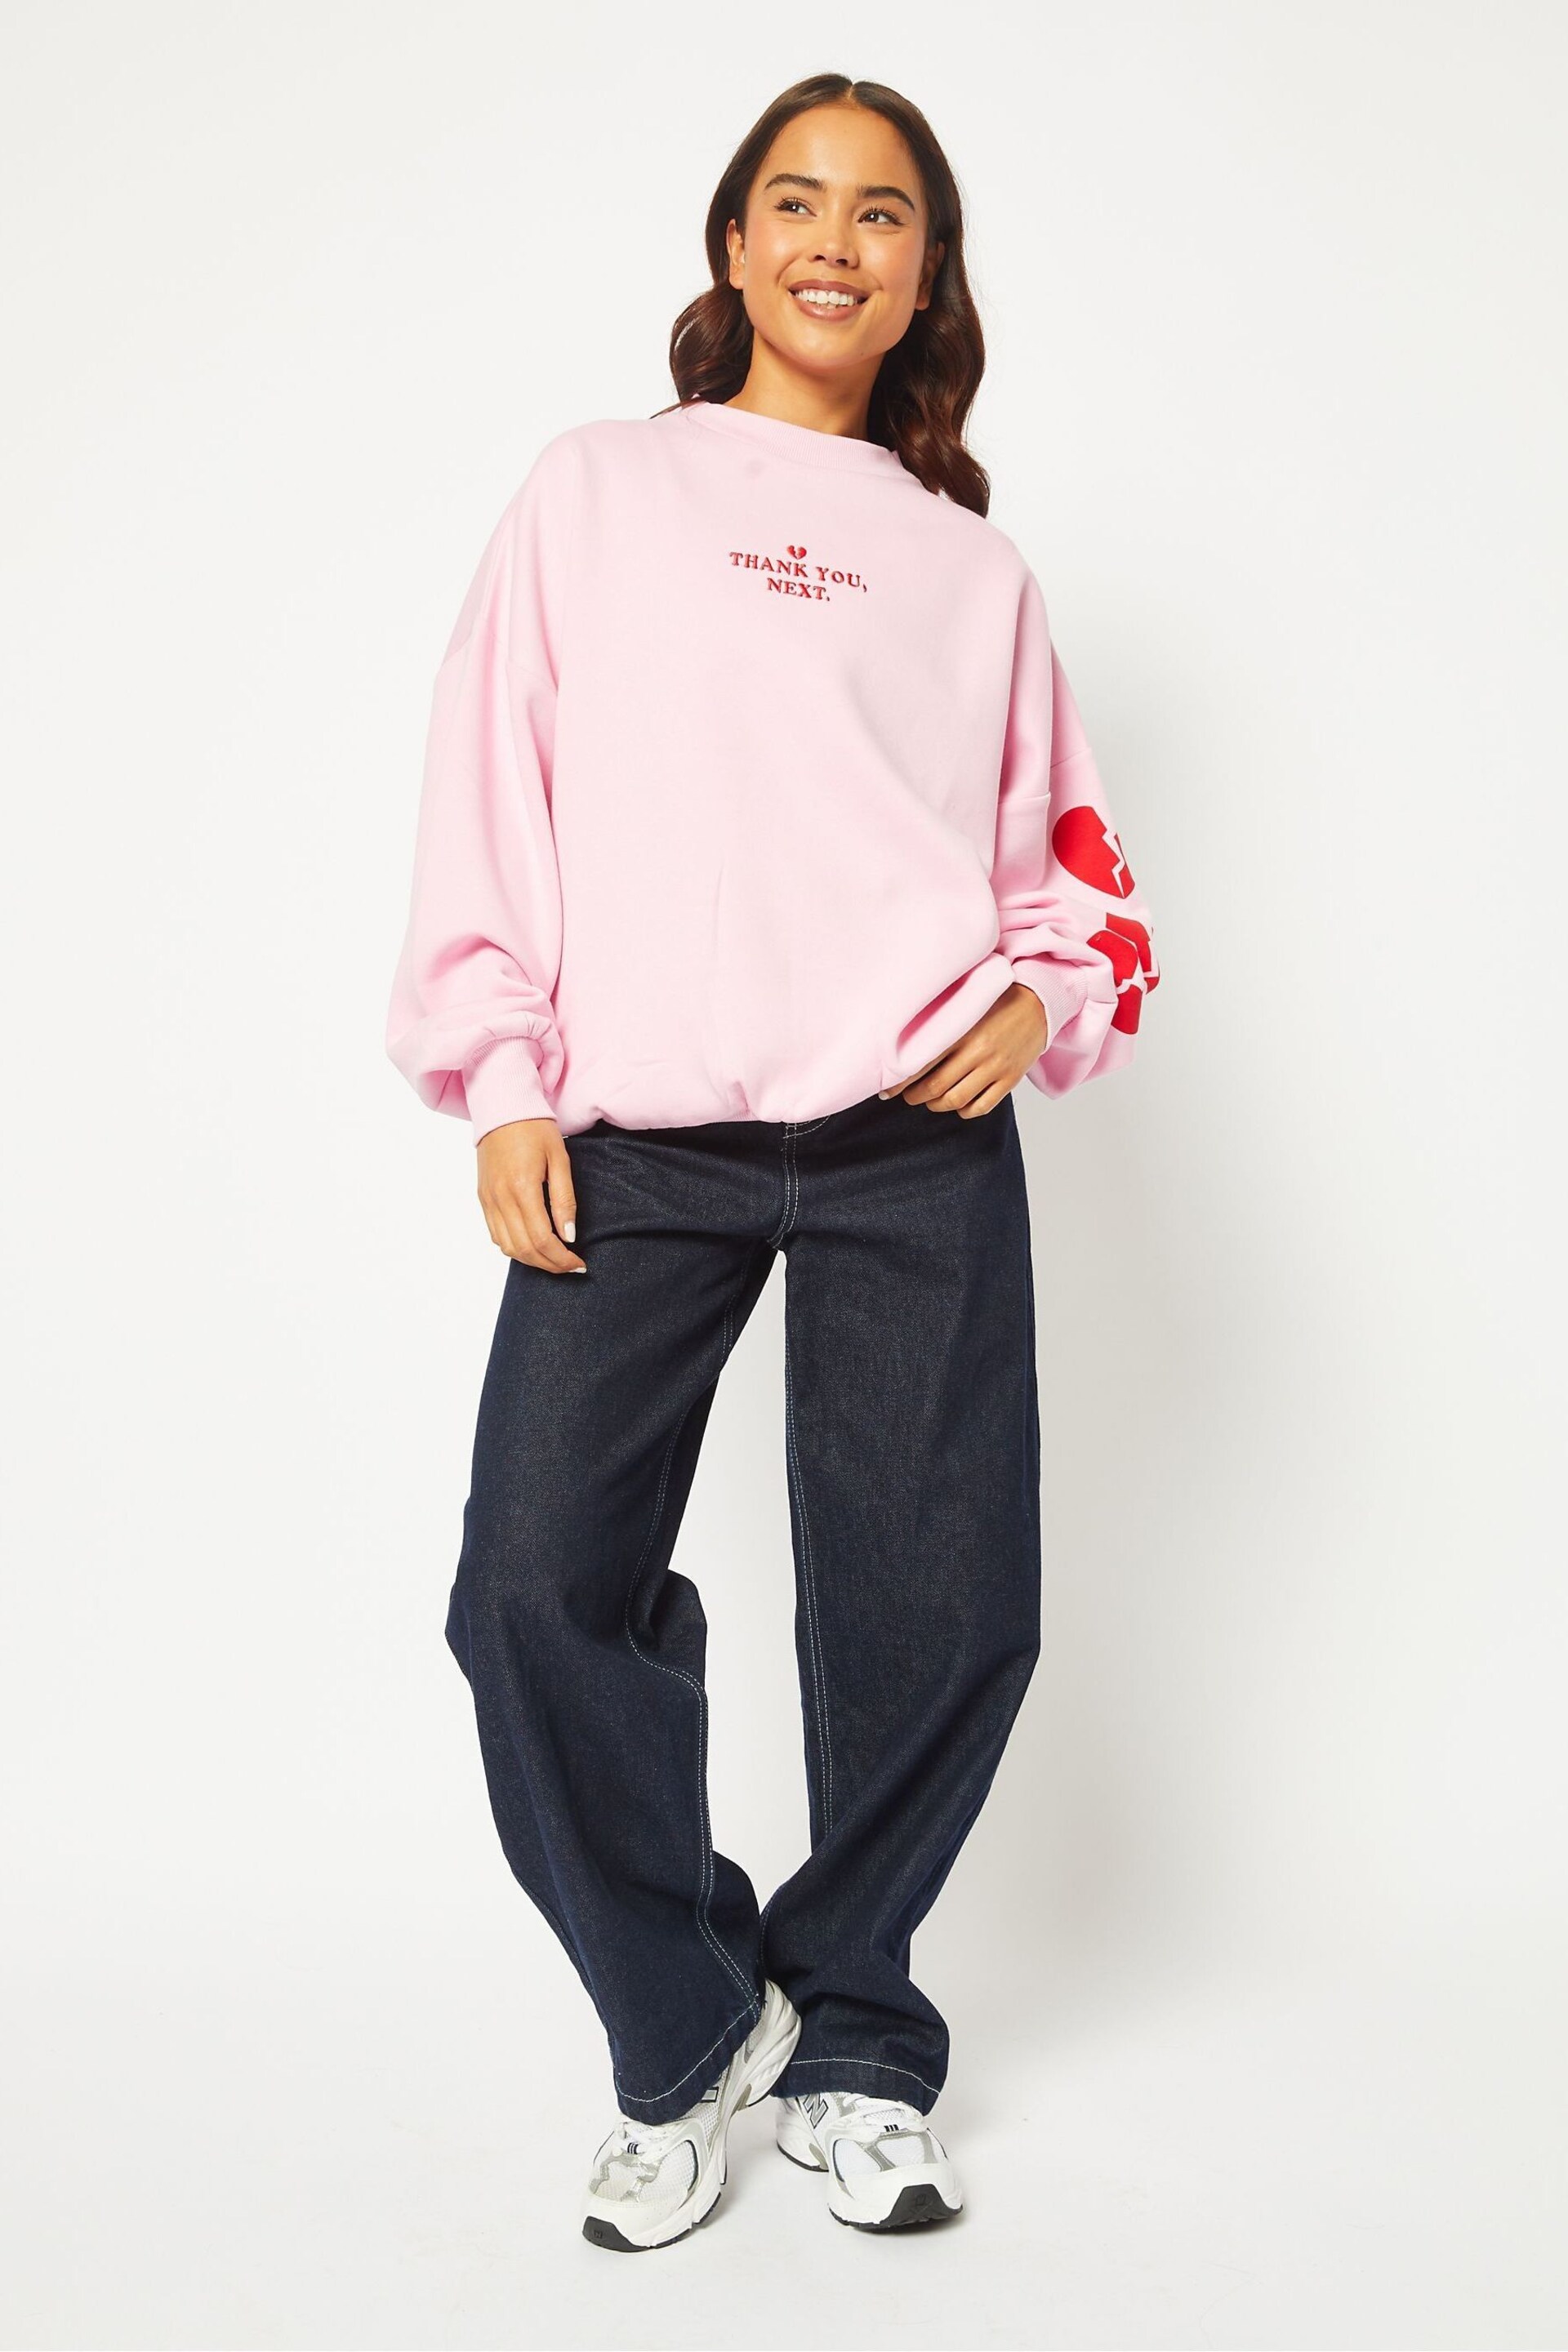 Skinnydip Oversized Pink Thank You Next Sweatshirt - Image 3 of 5